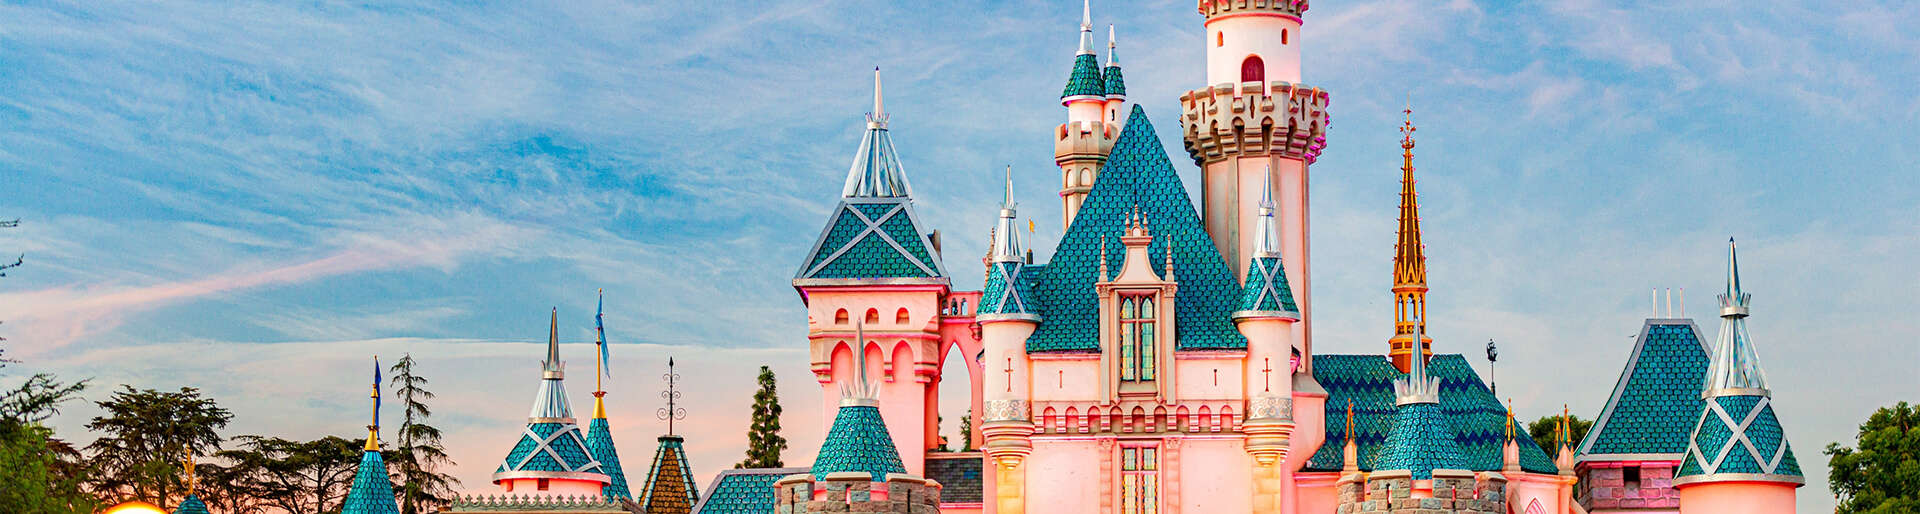 Disneyland Resort Banner